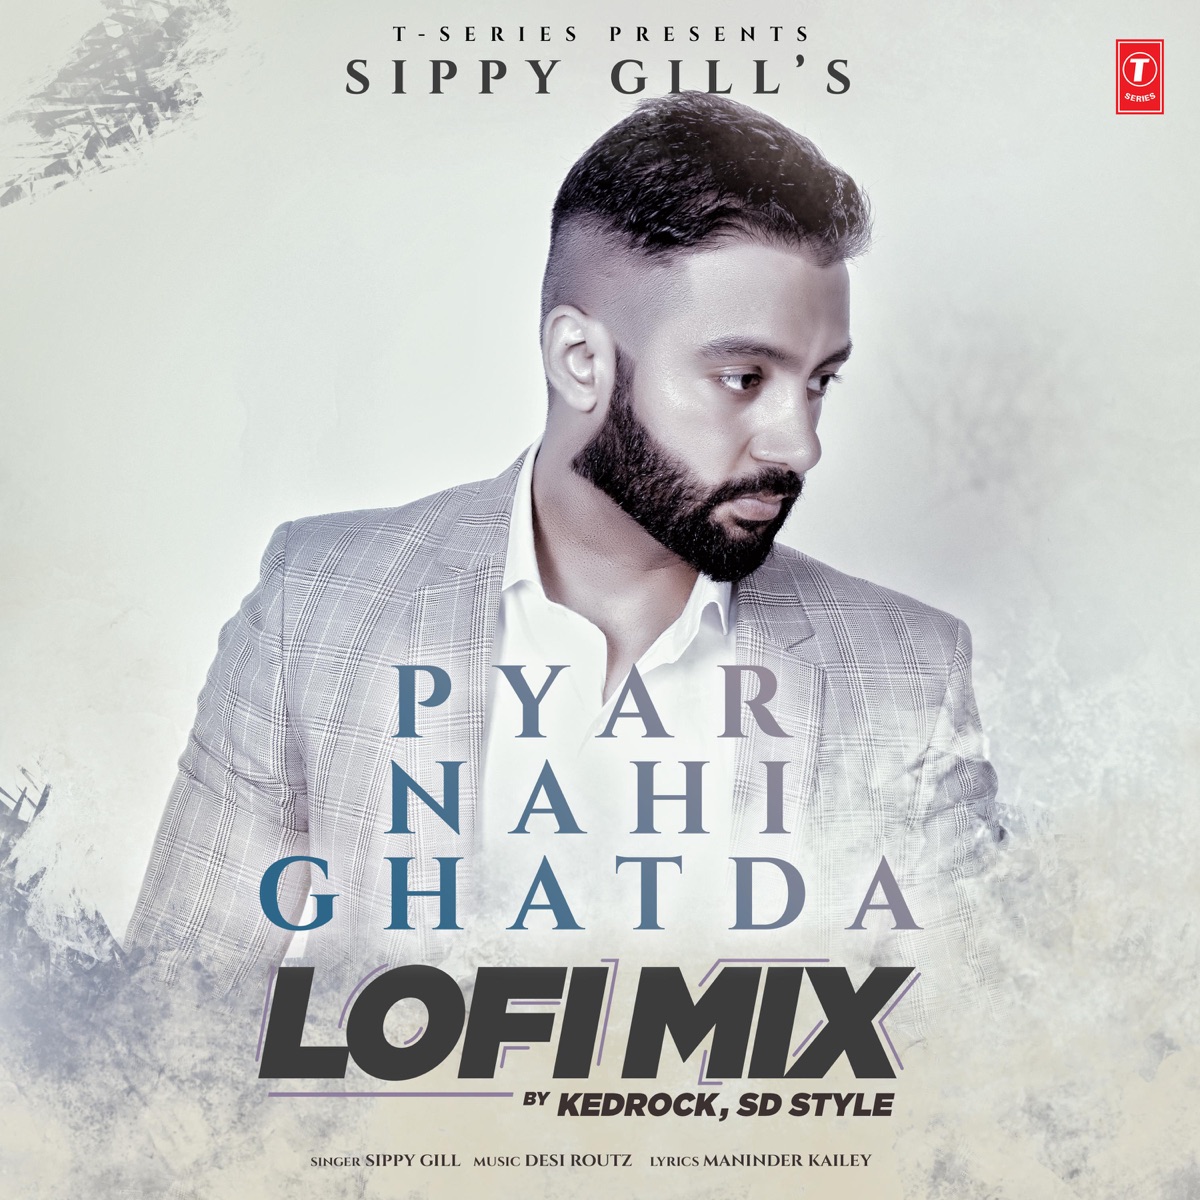 Pyar Nahi Ghatda Lofi Mix - Single - Album by Sippy Gill, Kedrock & Sd  Style - Apple Music